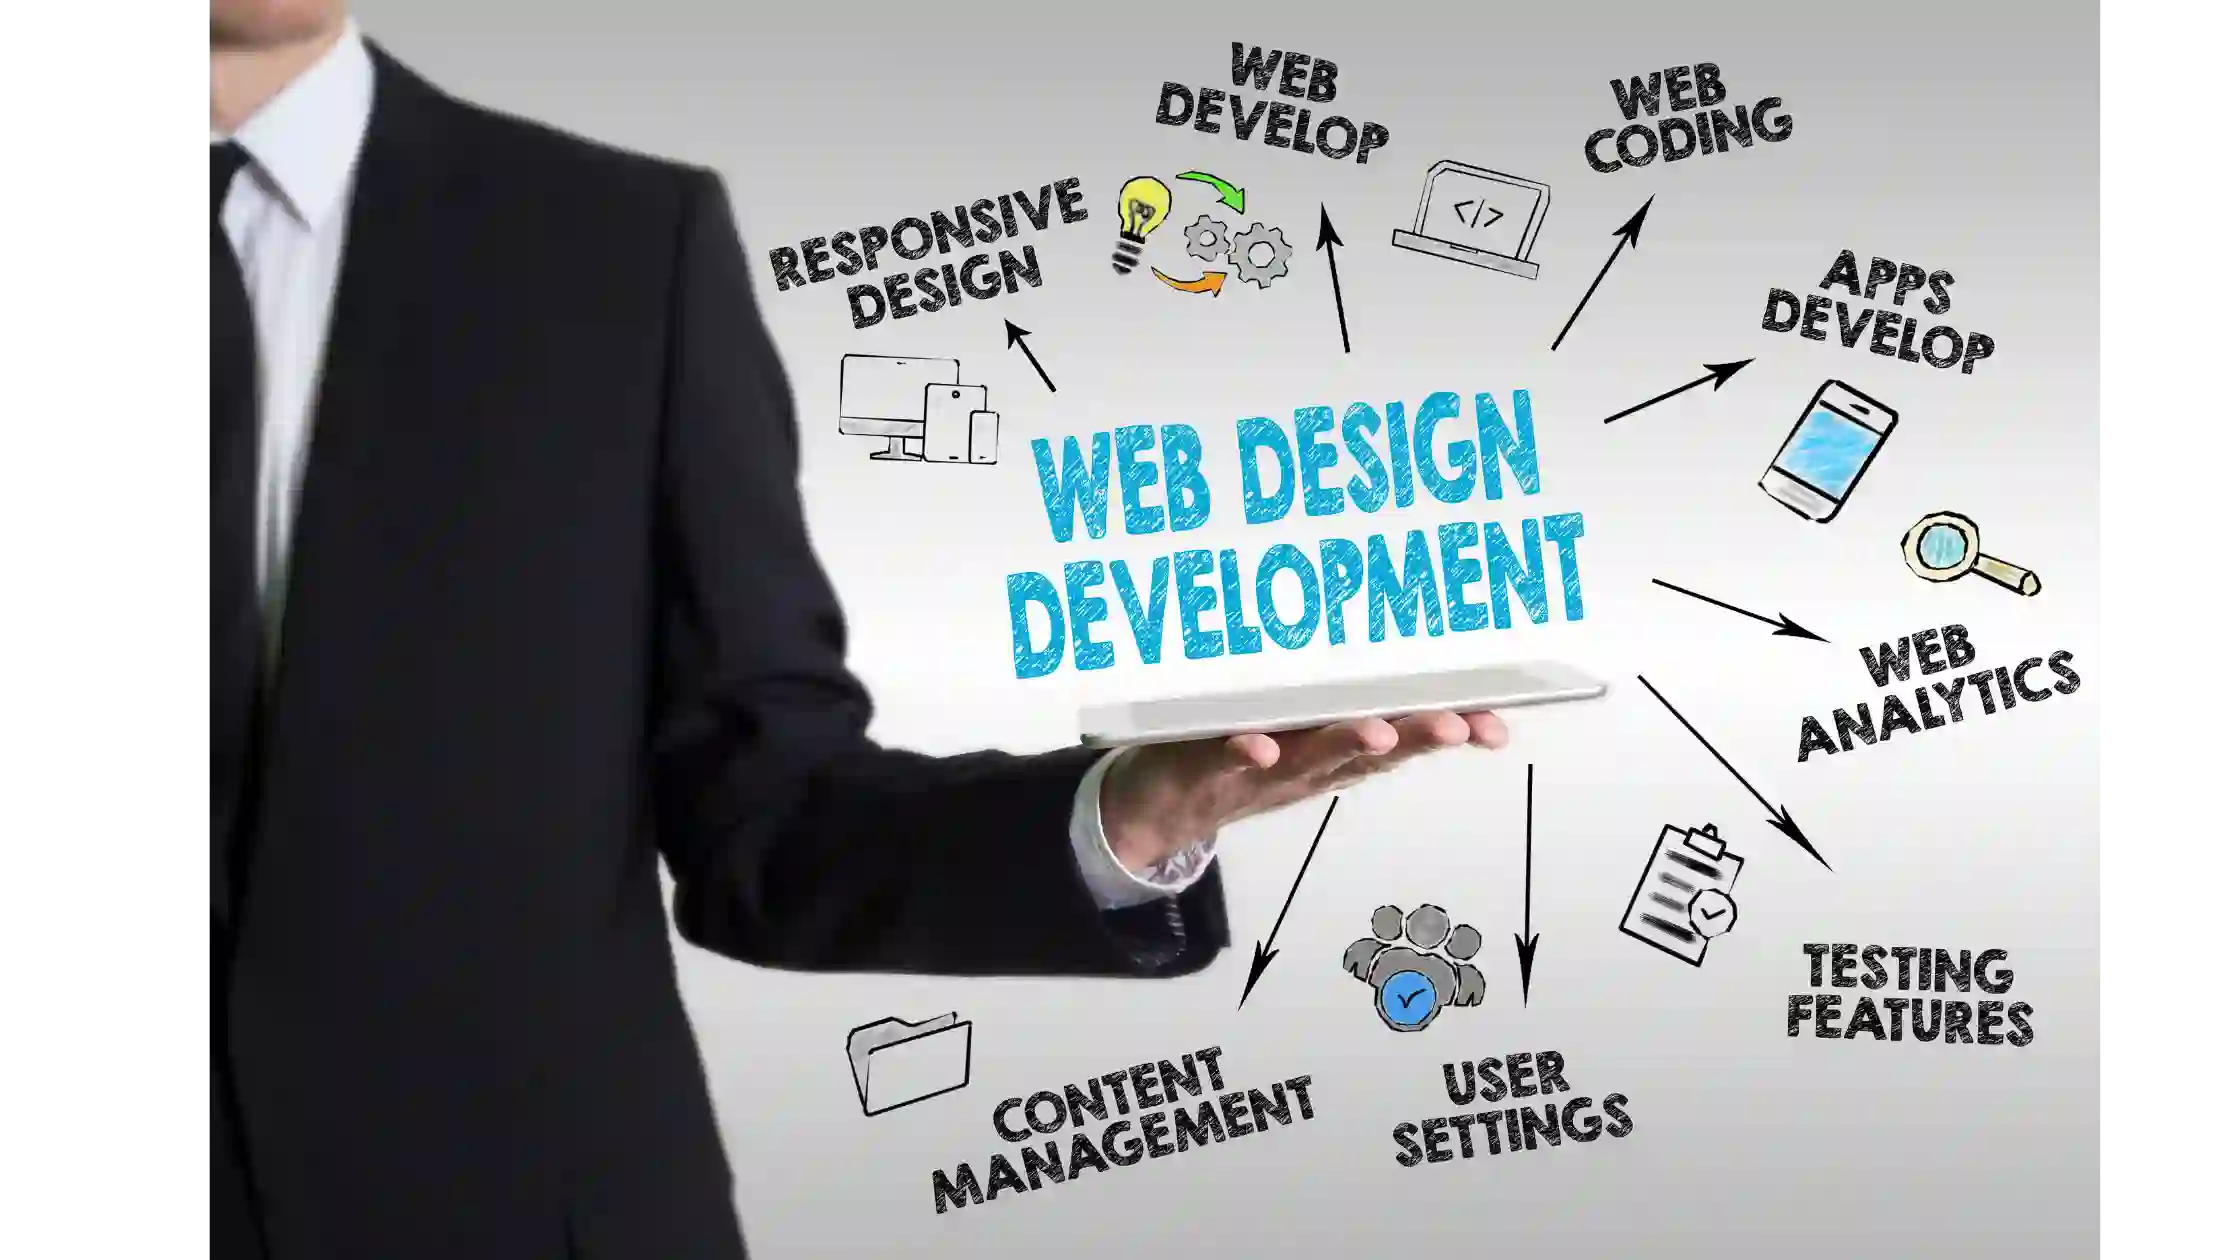 Web Design and Development concept